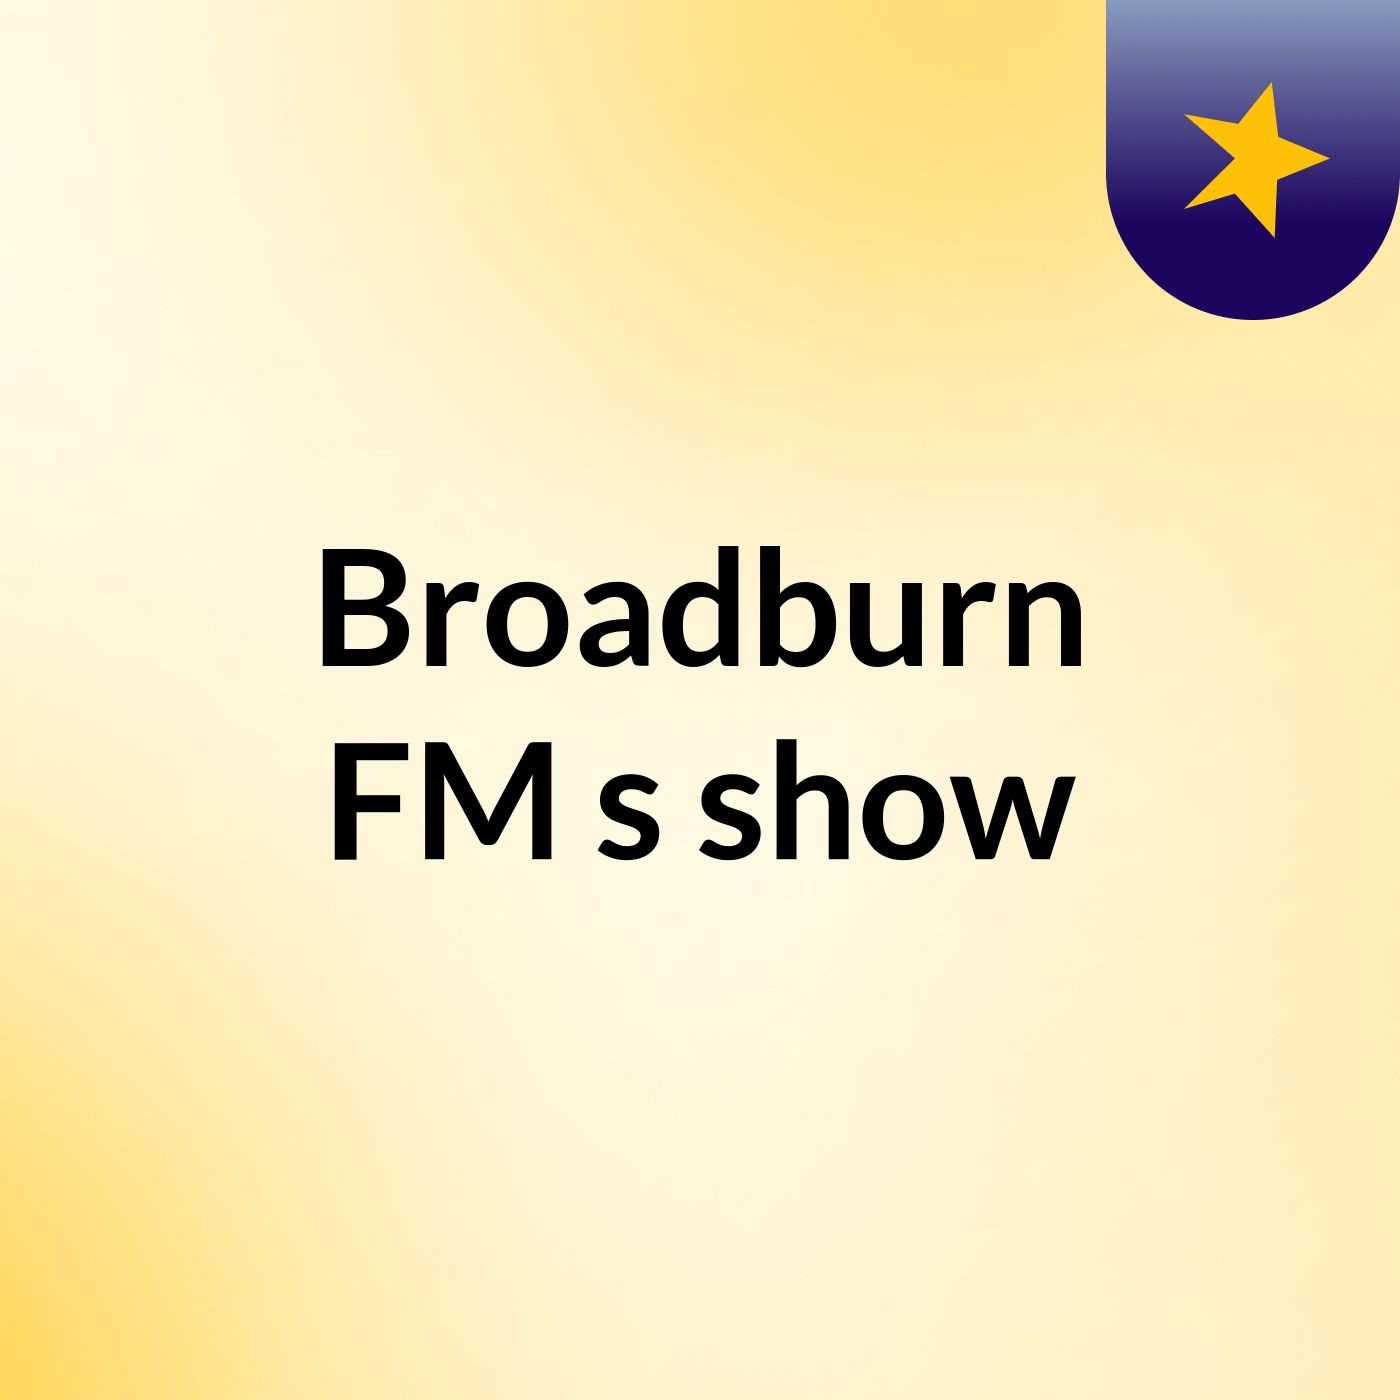 Broadburn FM's show